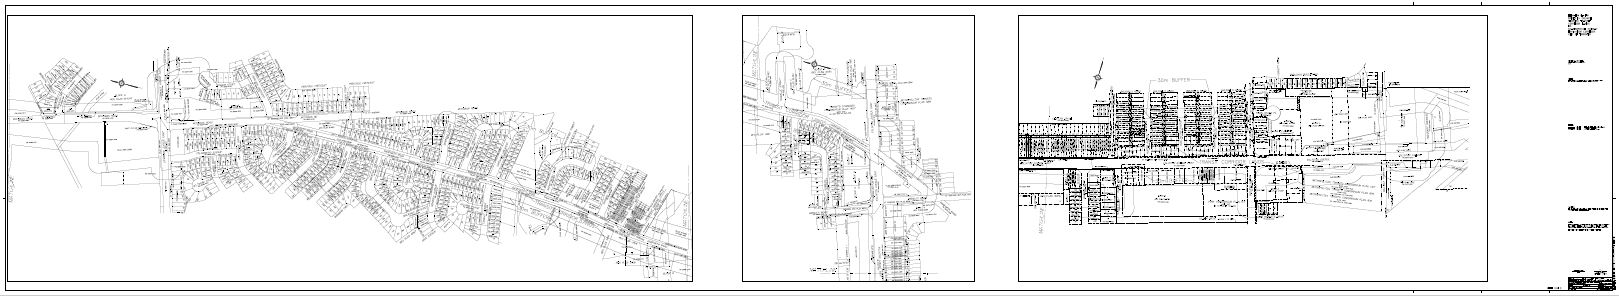 Scarborough Subway Extension Map - Sheet 2 of 5